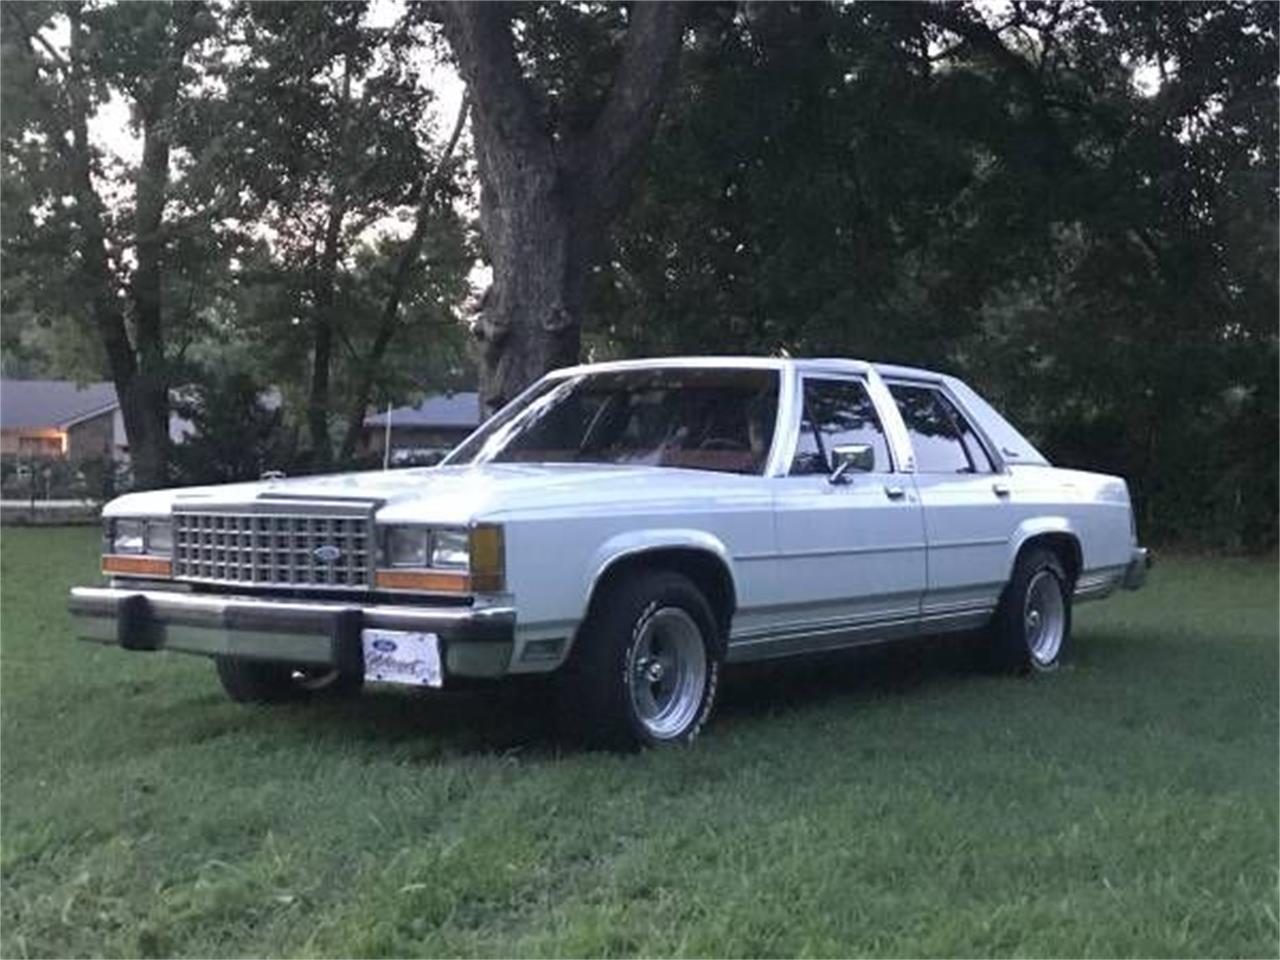 For Sale: 1986 Ford LTD in Cadillac, Michigan.